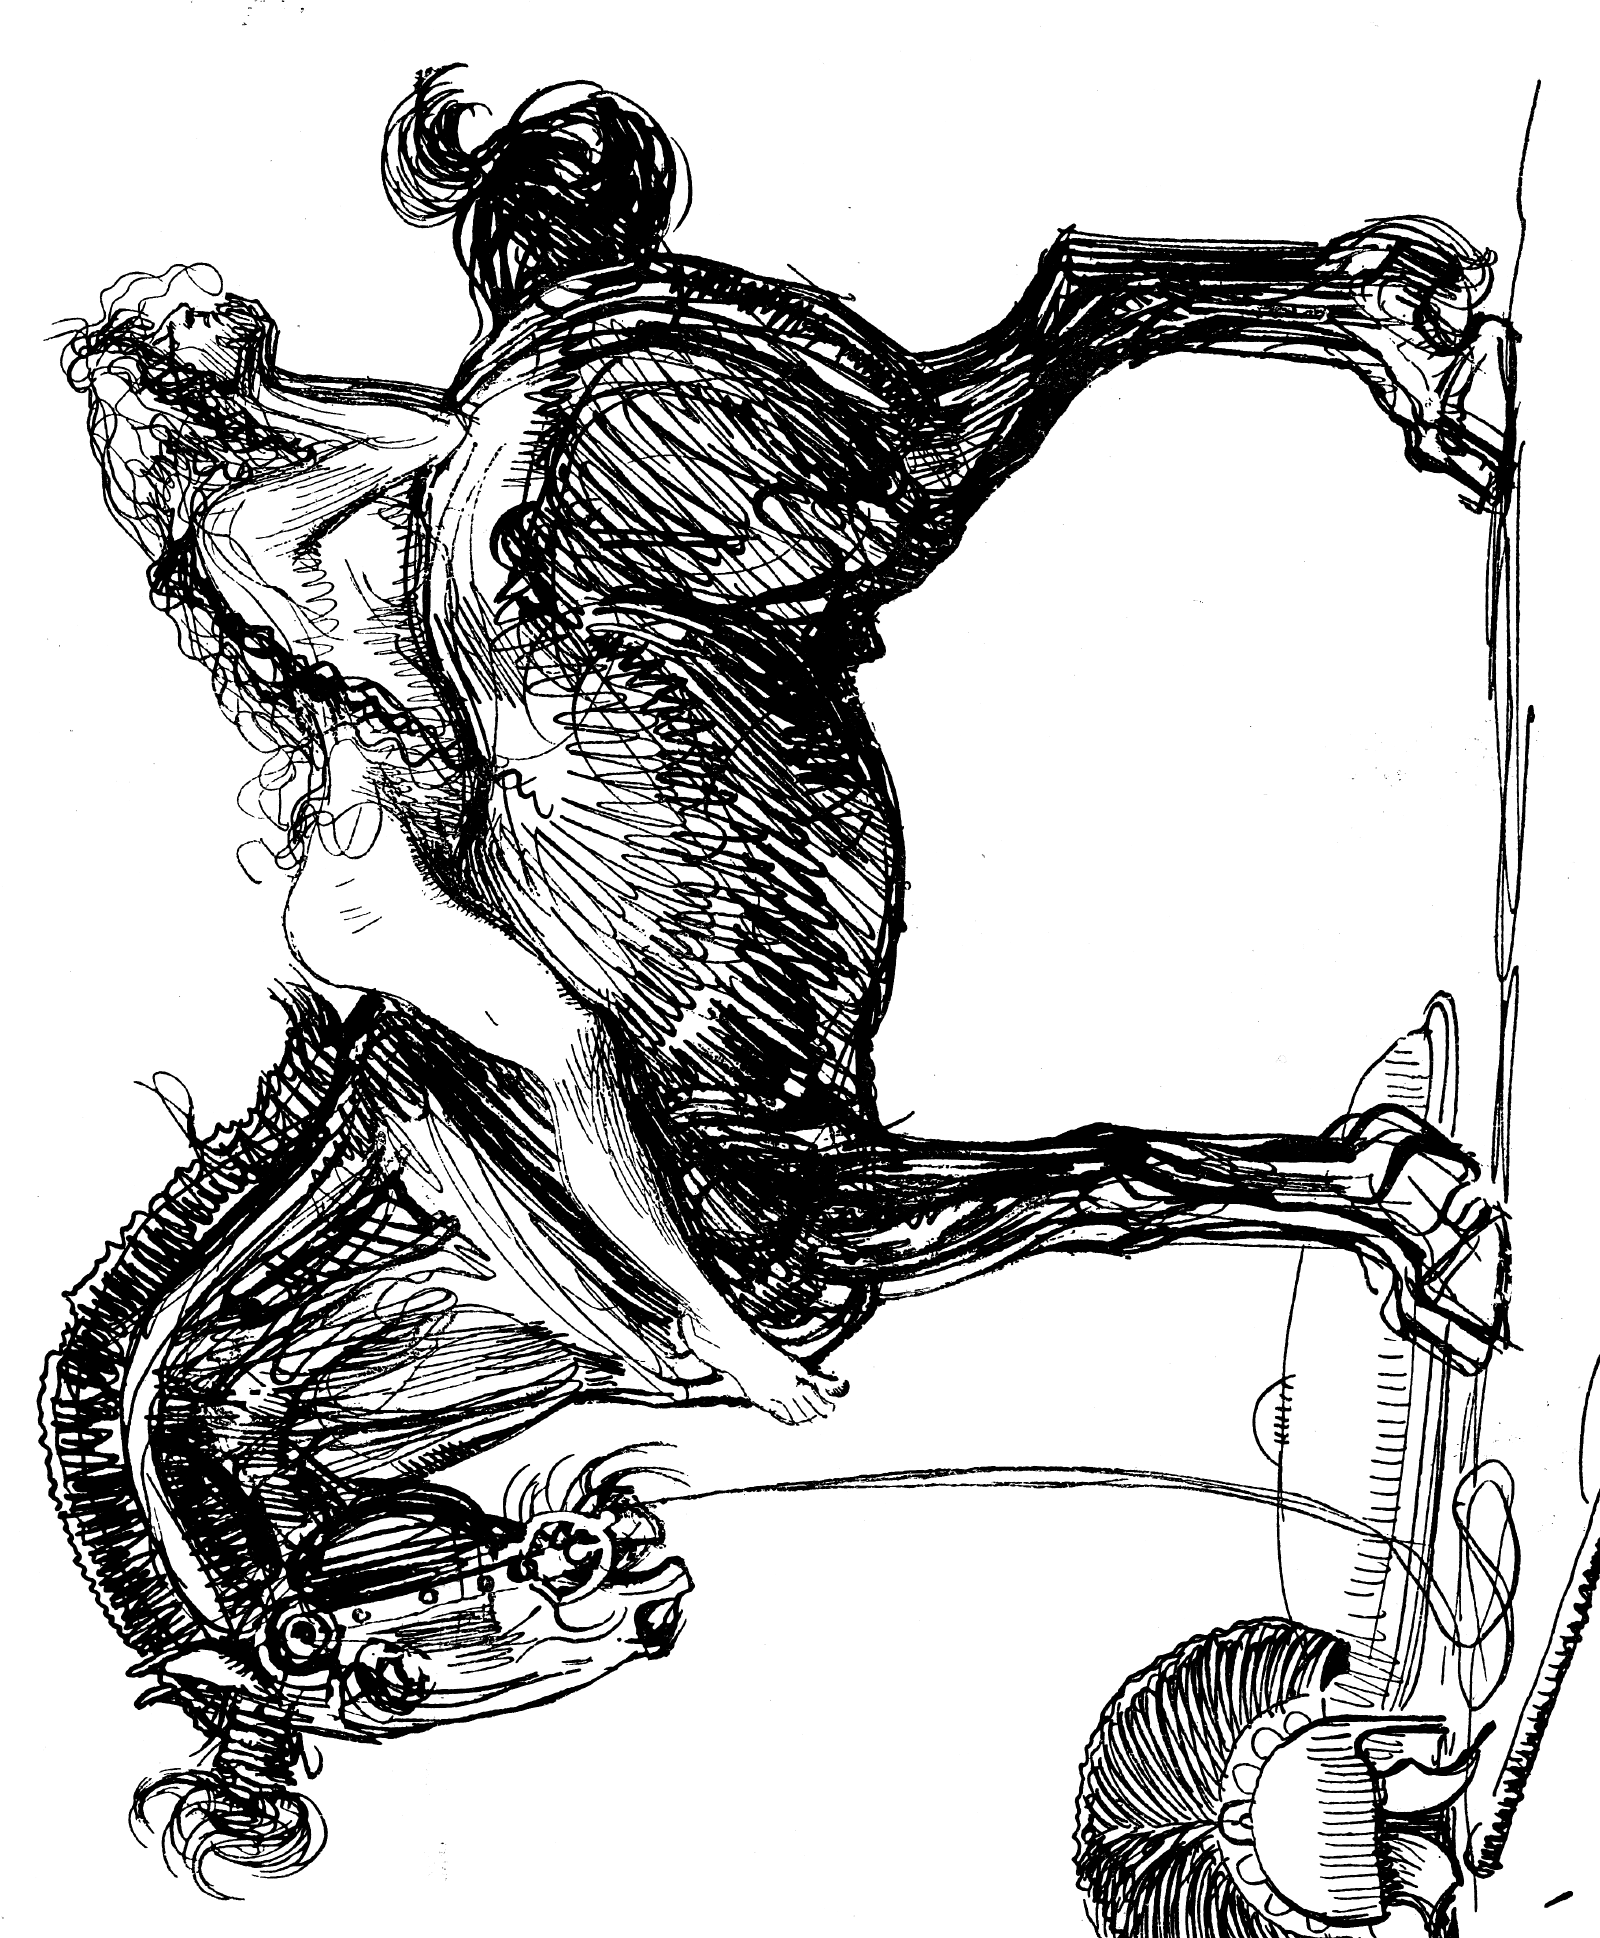 Heinrich Kley illustration scanned from 1911 book